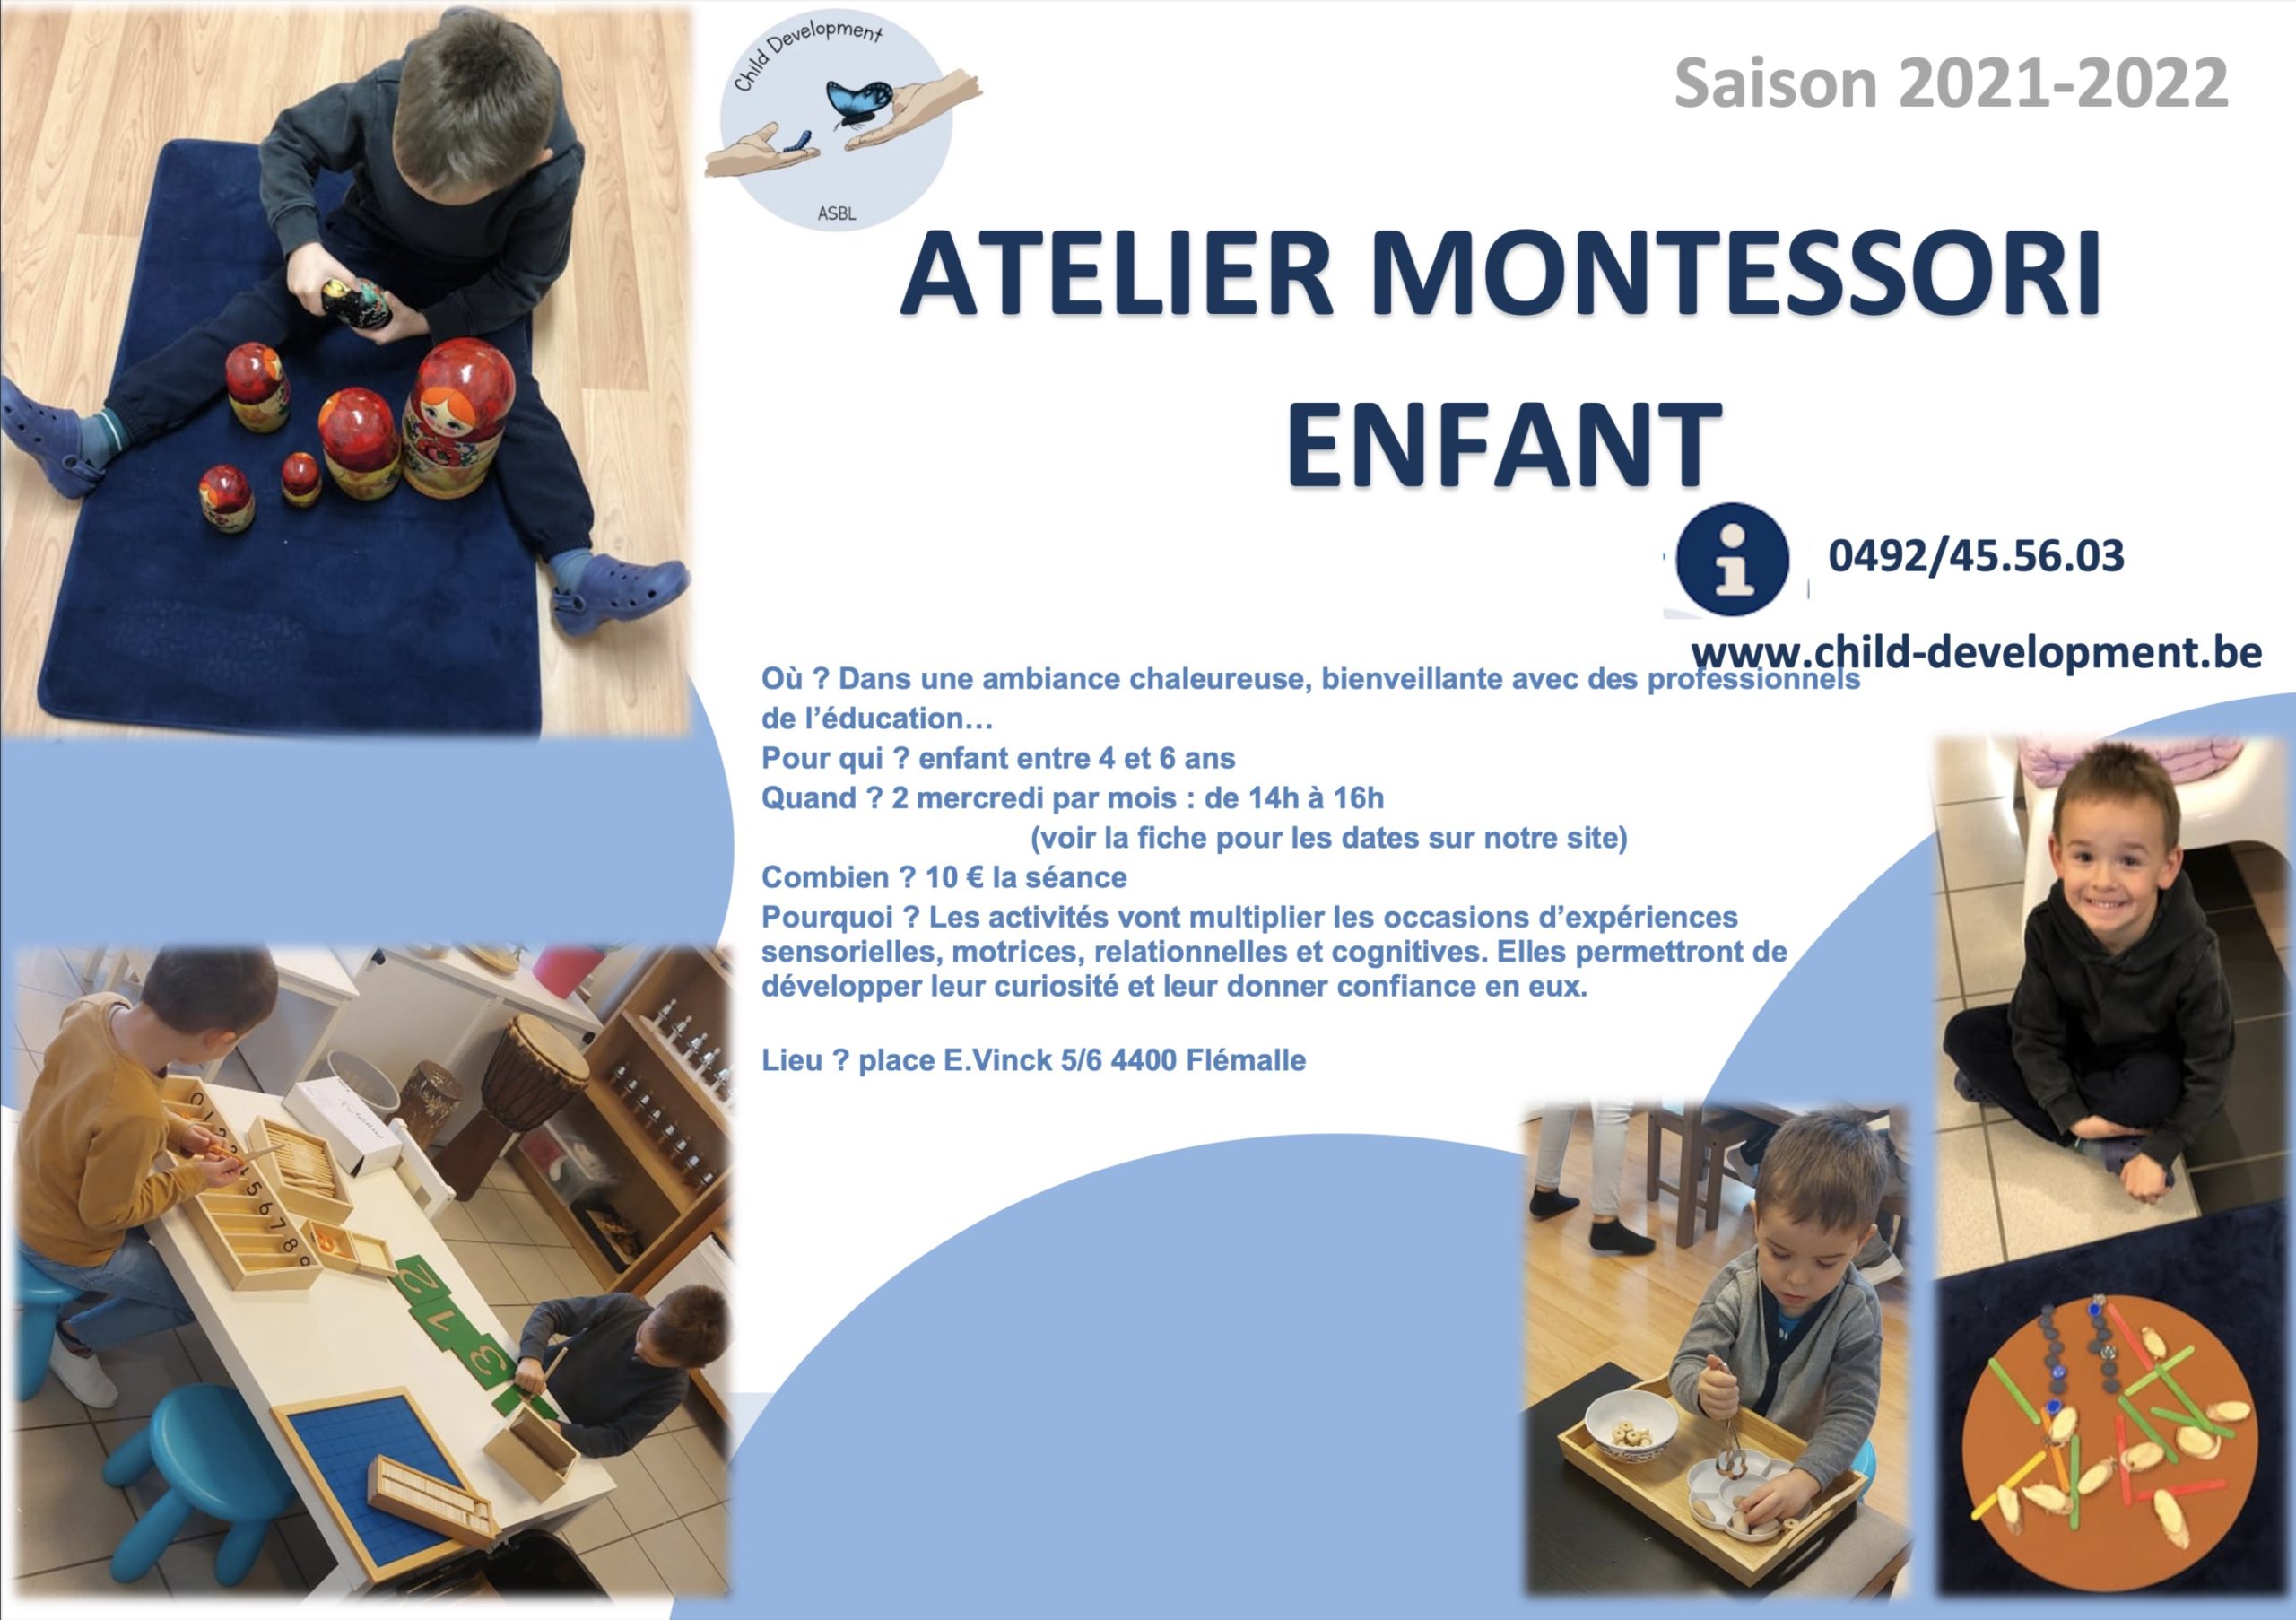 Atelier Montessori enfant